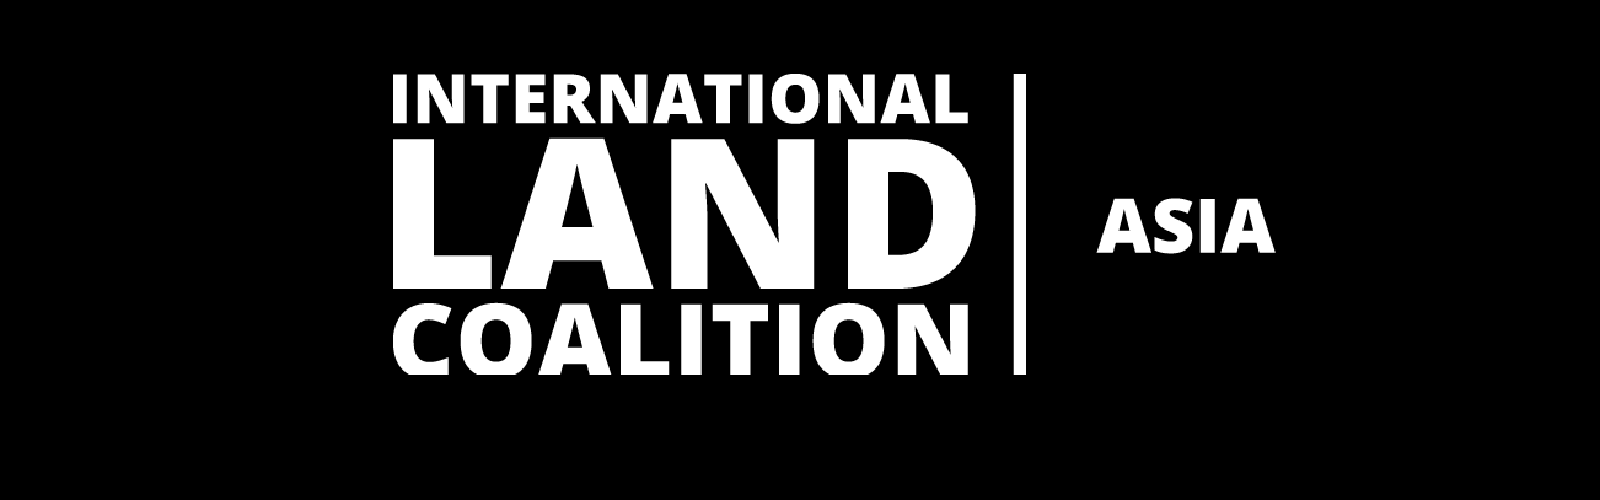 International land coaliton Asia